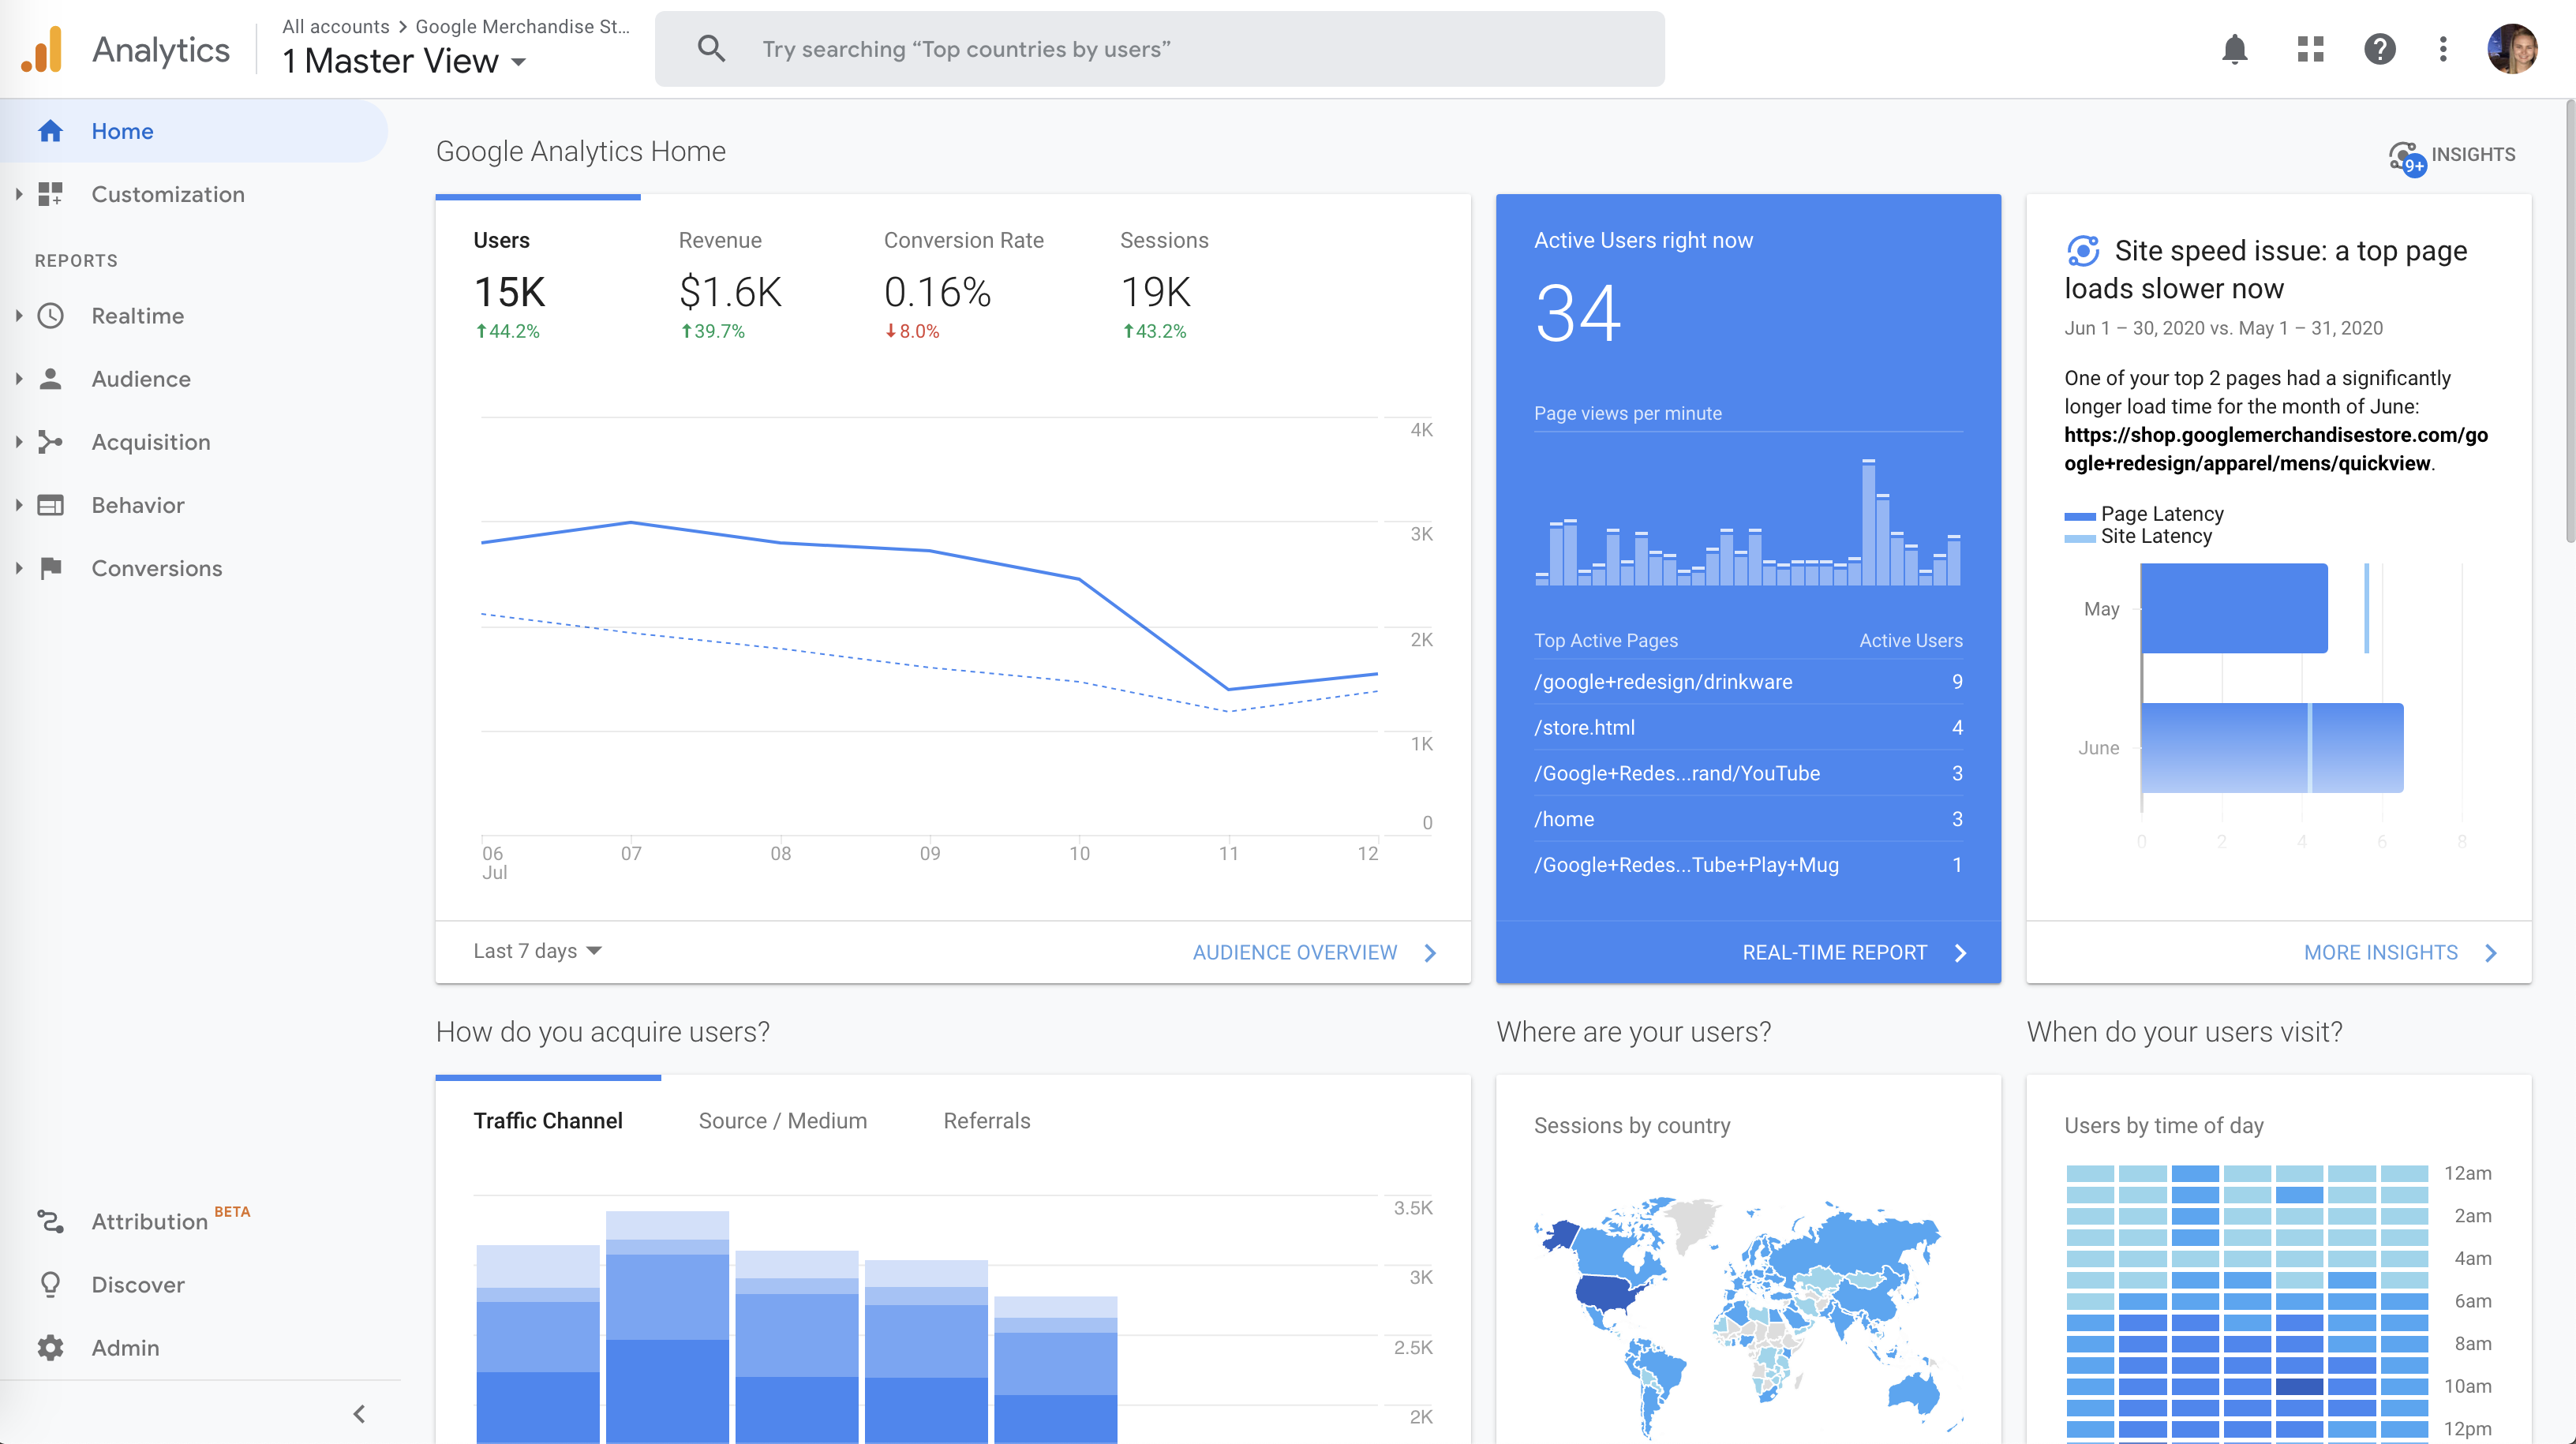 Dashboard home view of Google Analytics platform